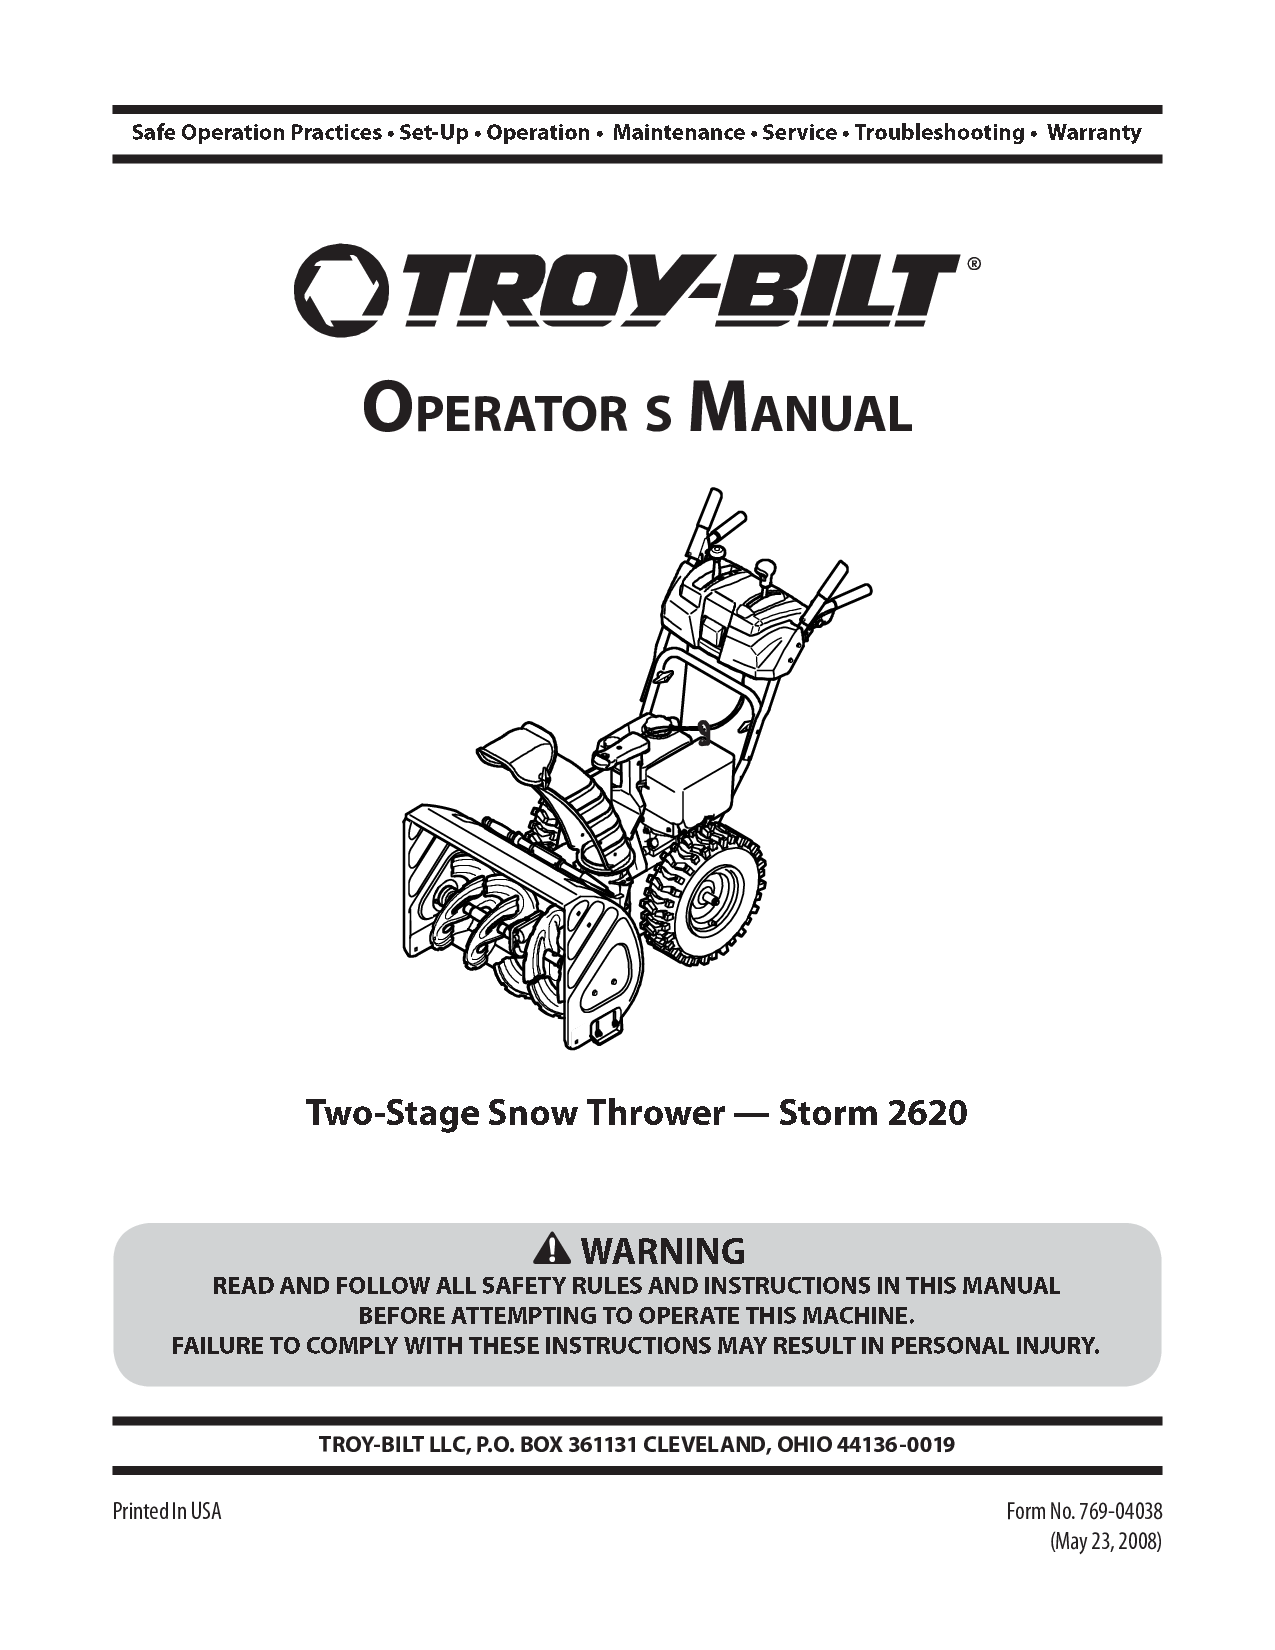 Troy-Bilt Storm 2620 User Manual